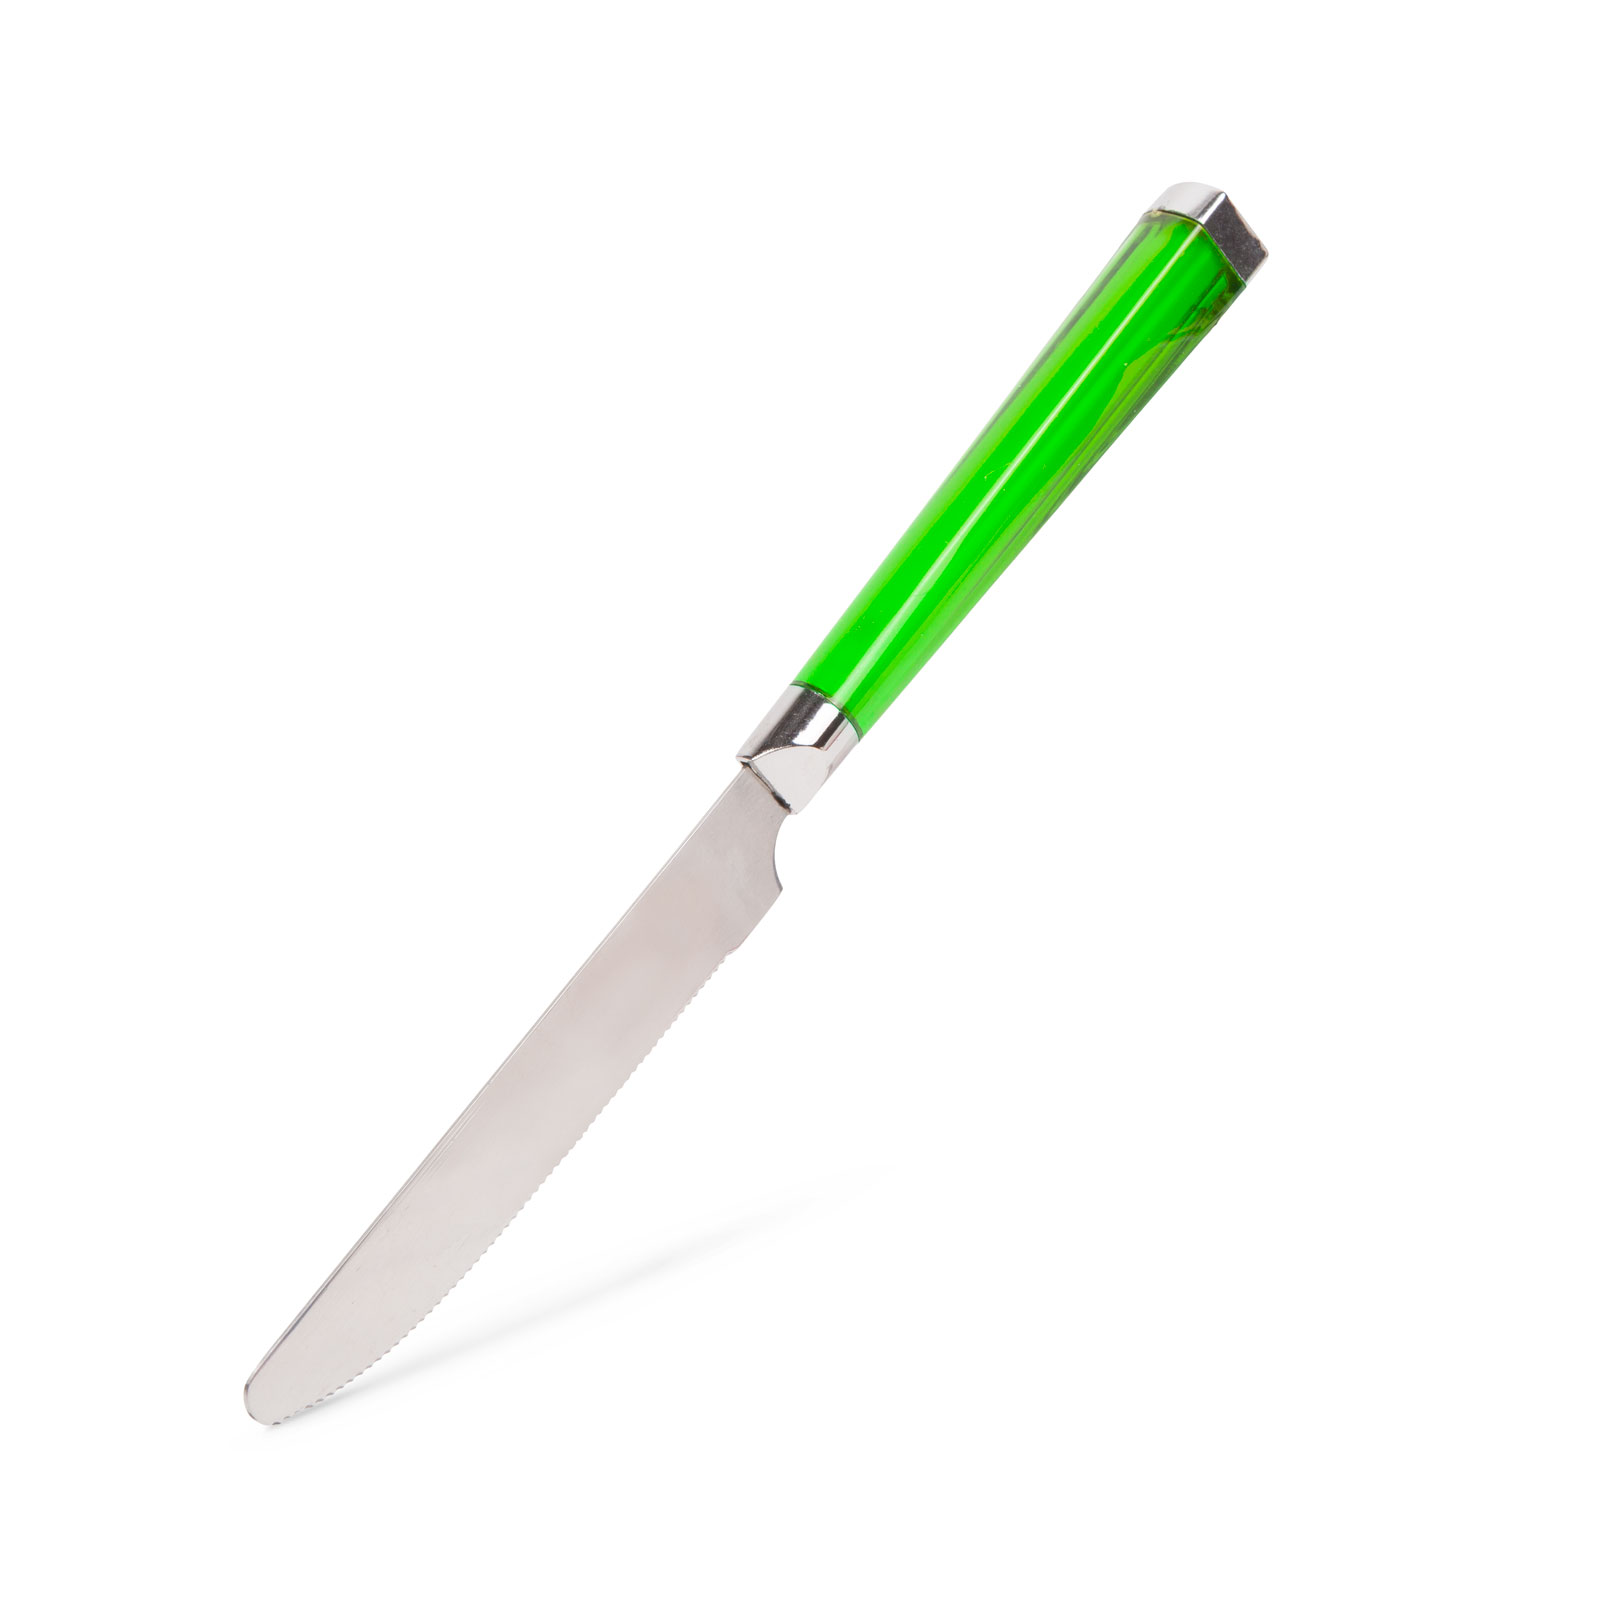 Cutlery set - green - 4 pcs - with plastic handle thumb